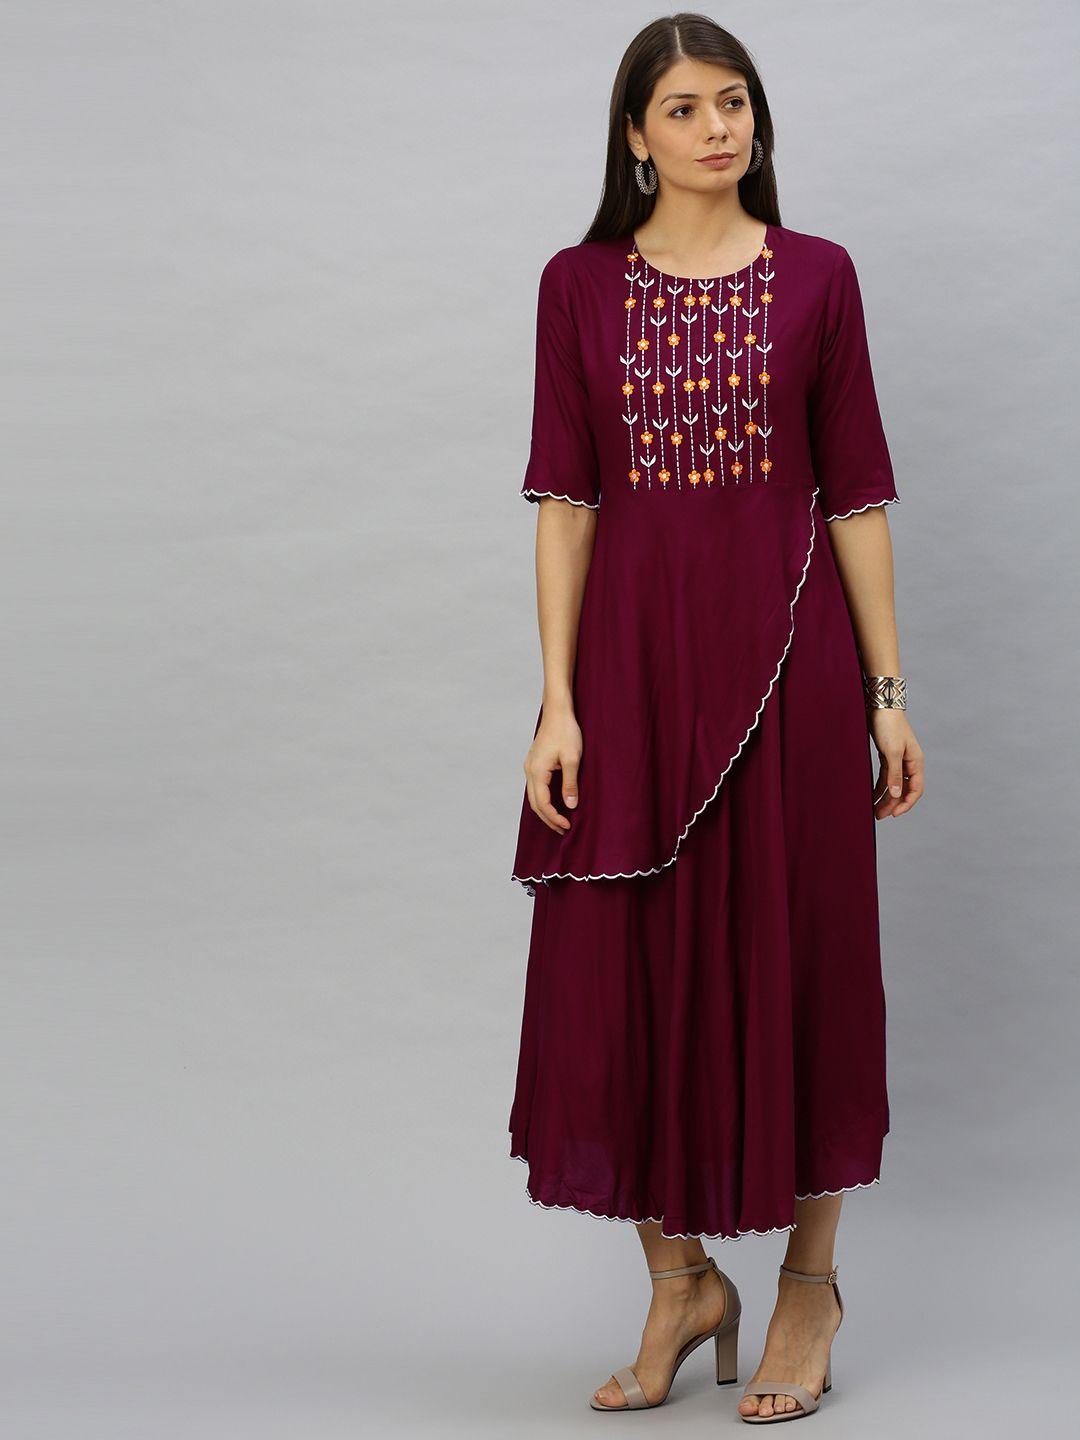 yash-gallery-women-burgundy-embroidered-layered-maxi-dress